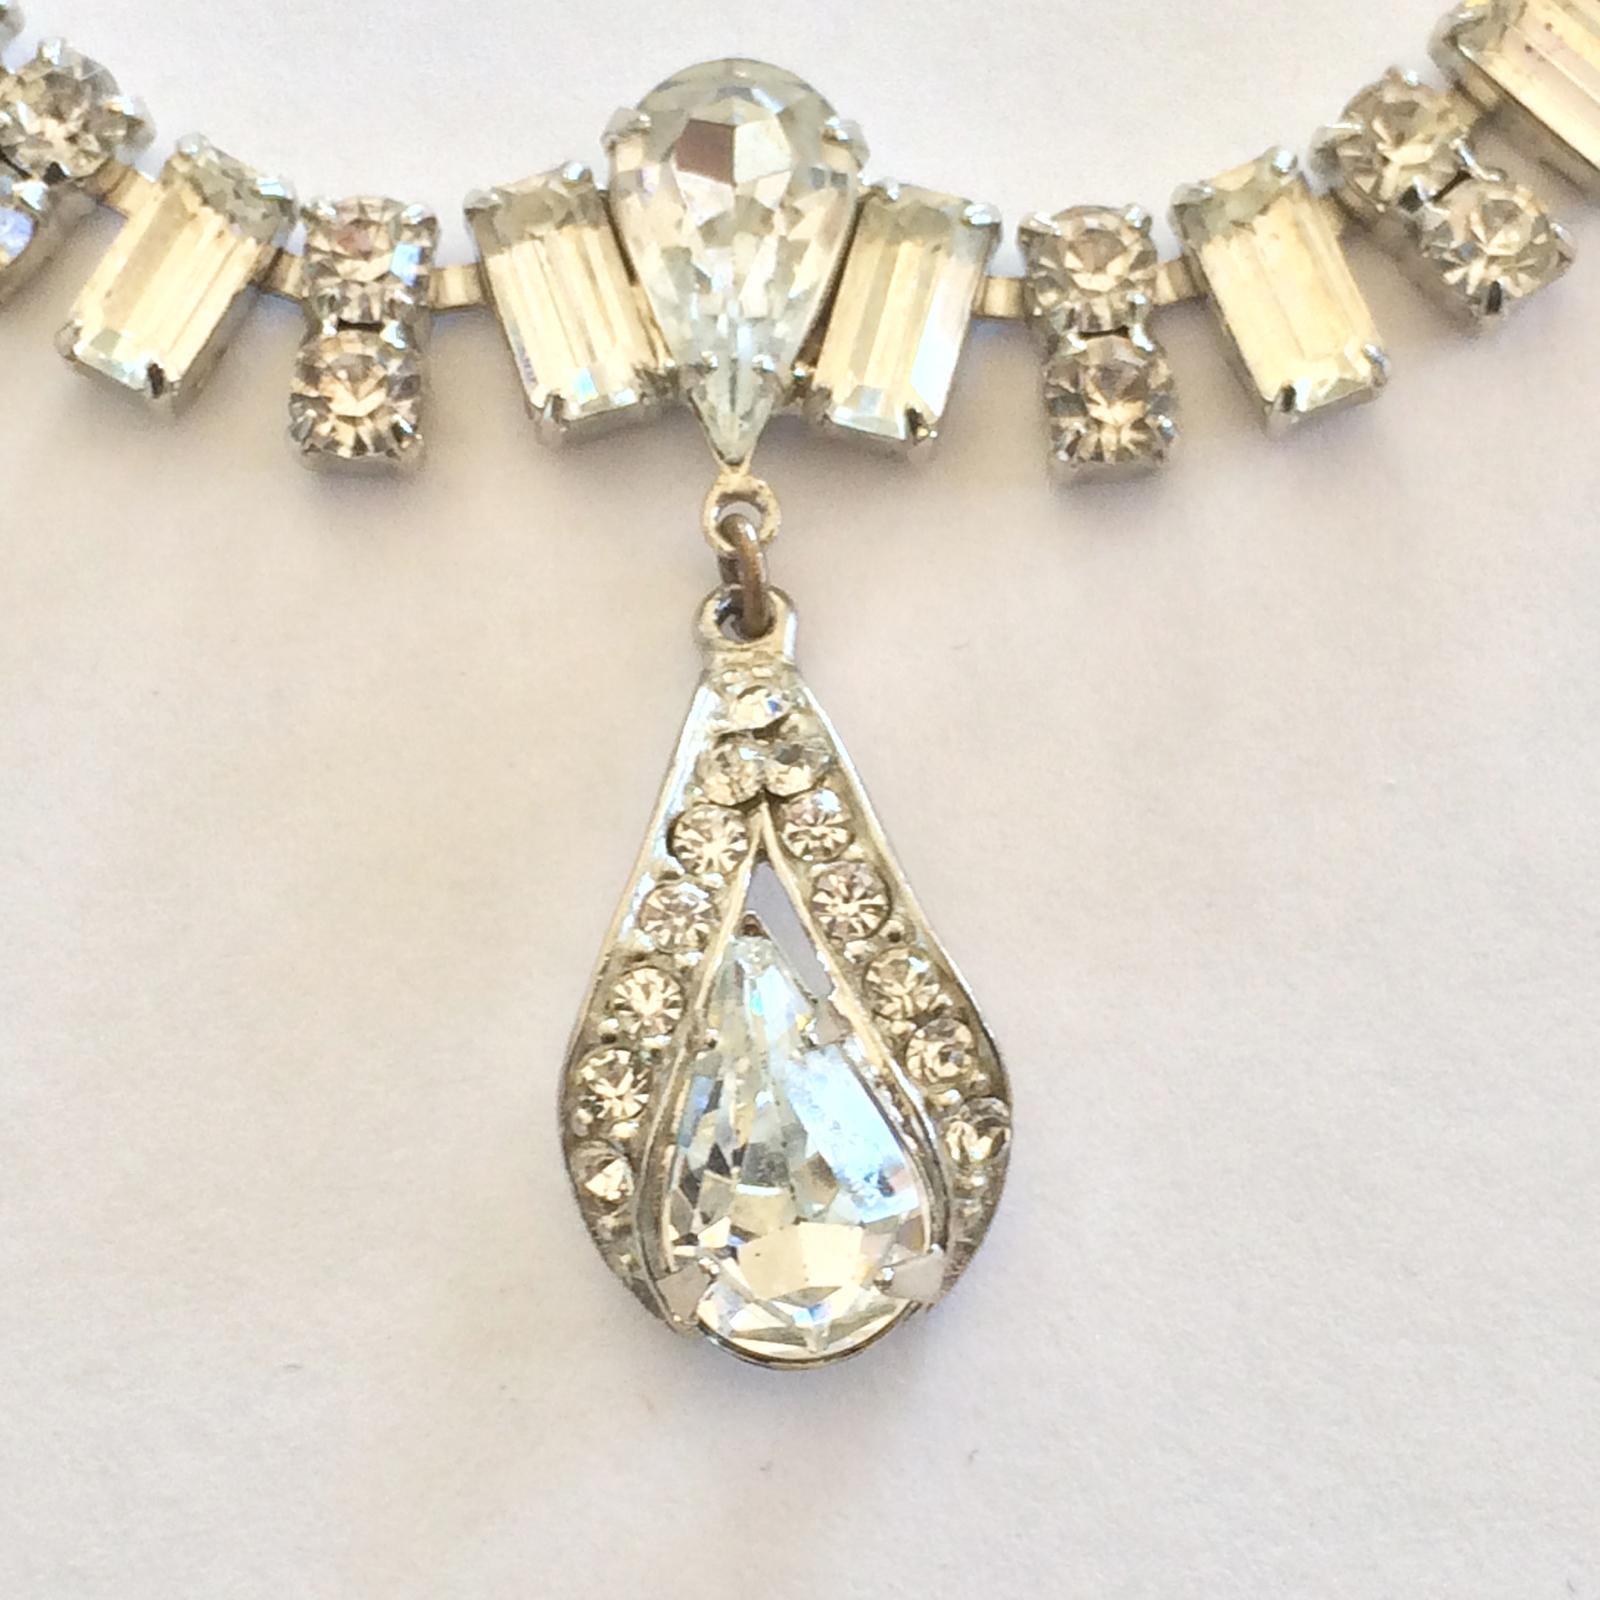 Women's Art Deco Spectacular Rhinestone Pendant necklace